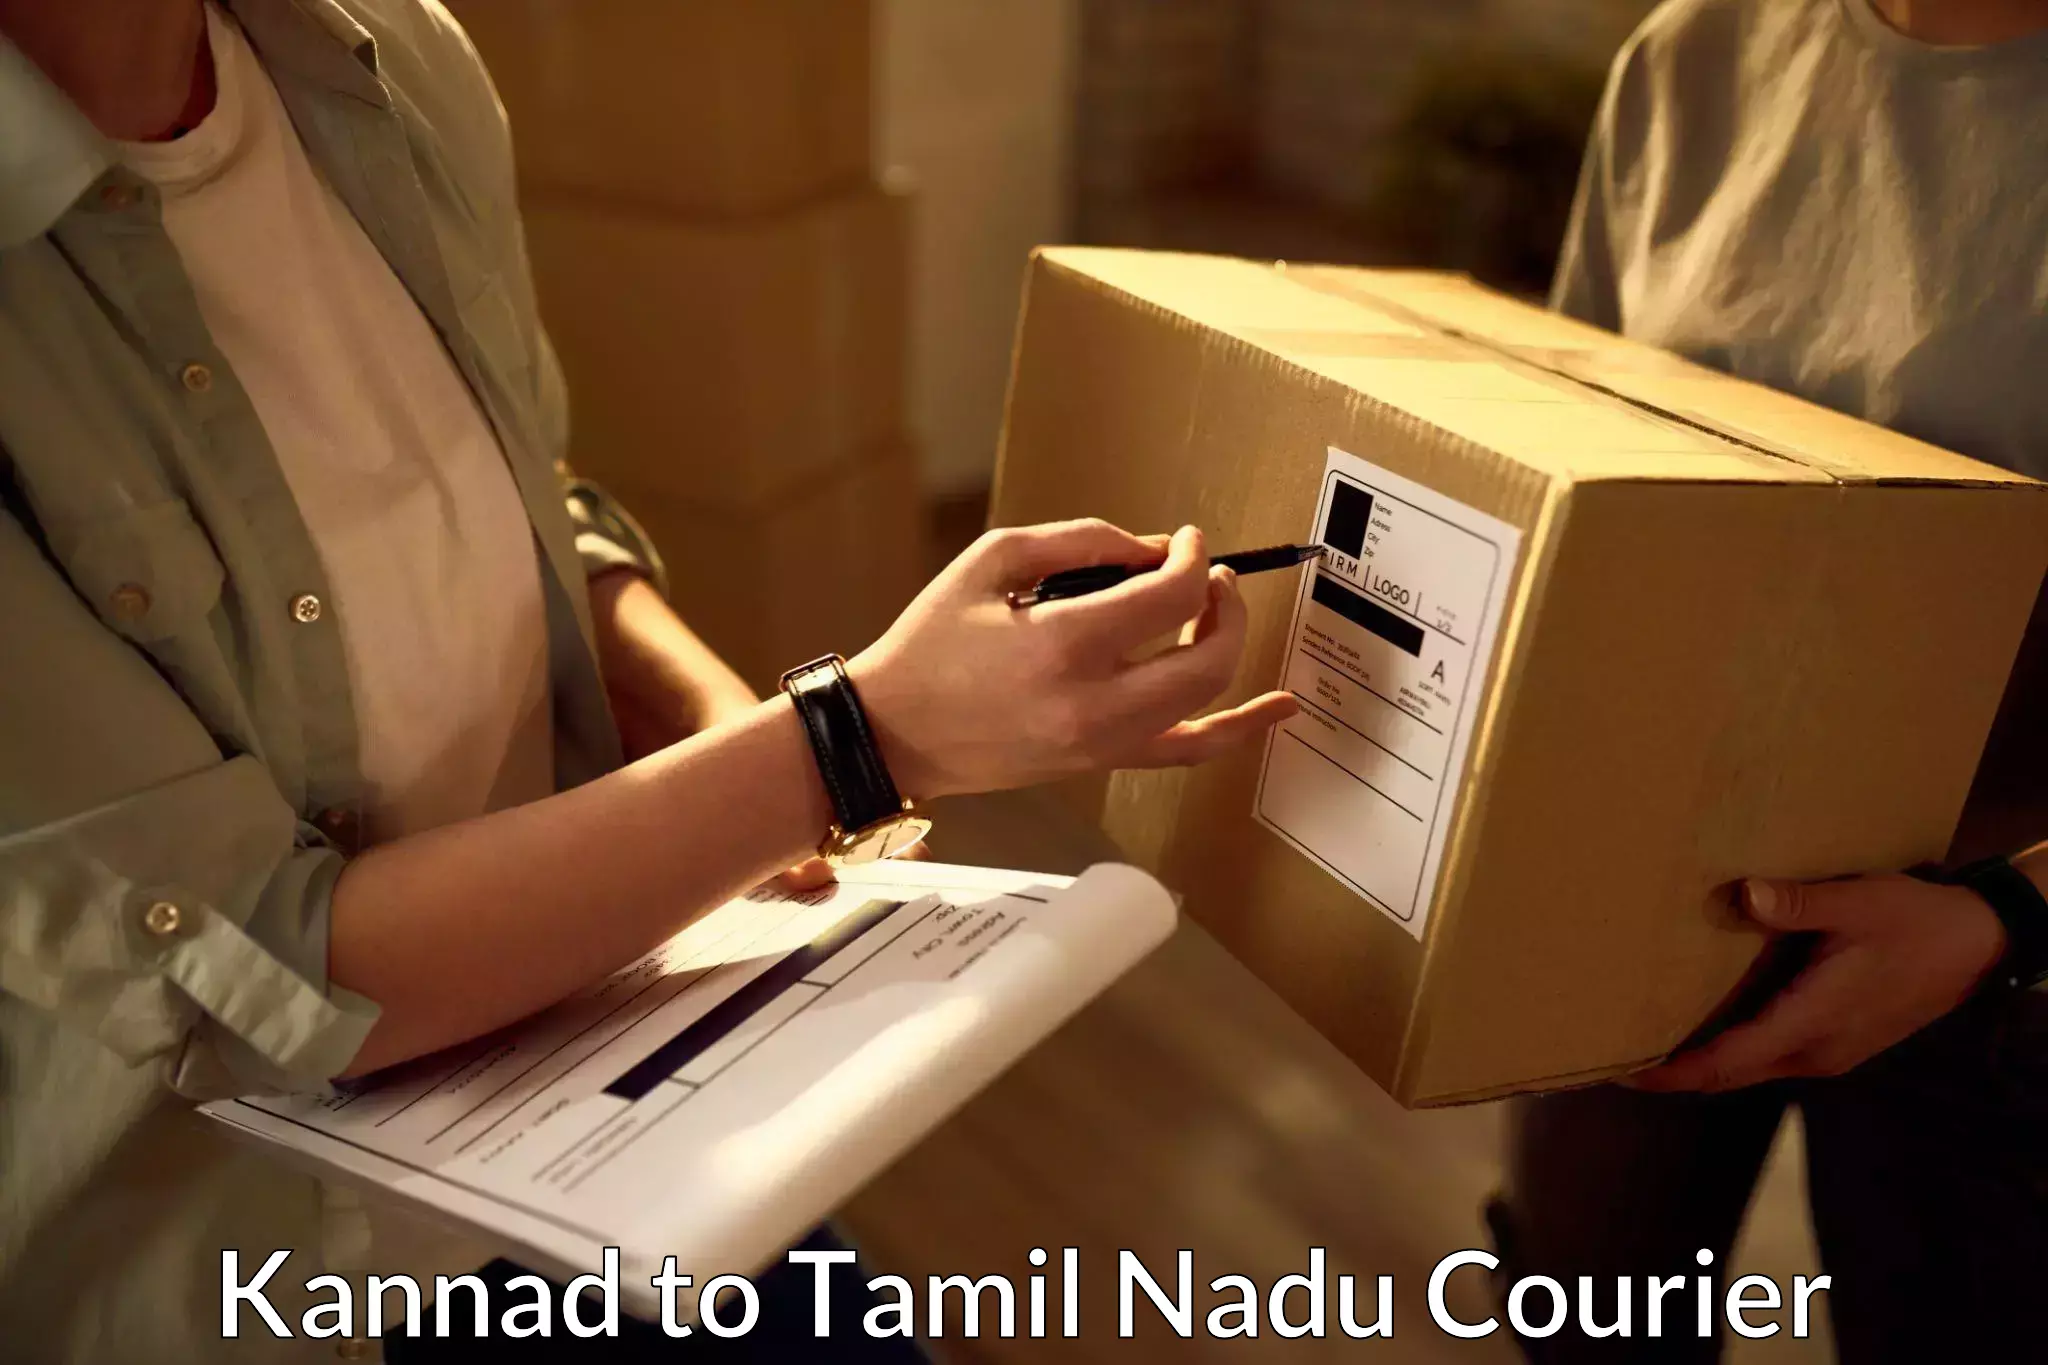 Courier tracking online Kannad to Virudhunagar